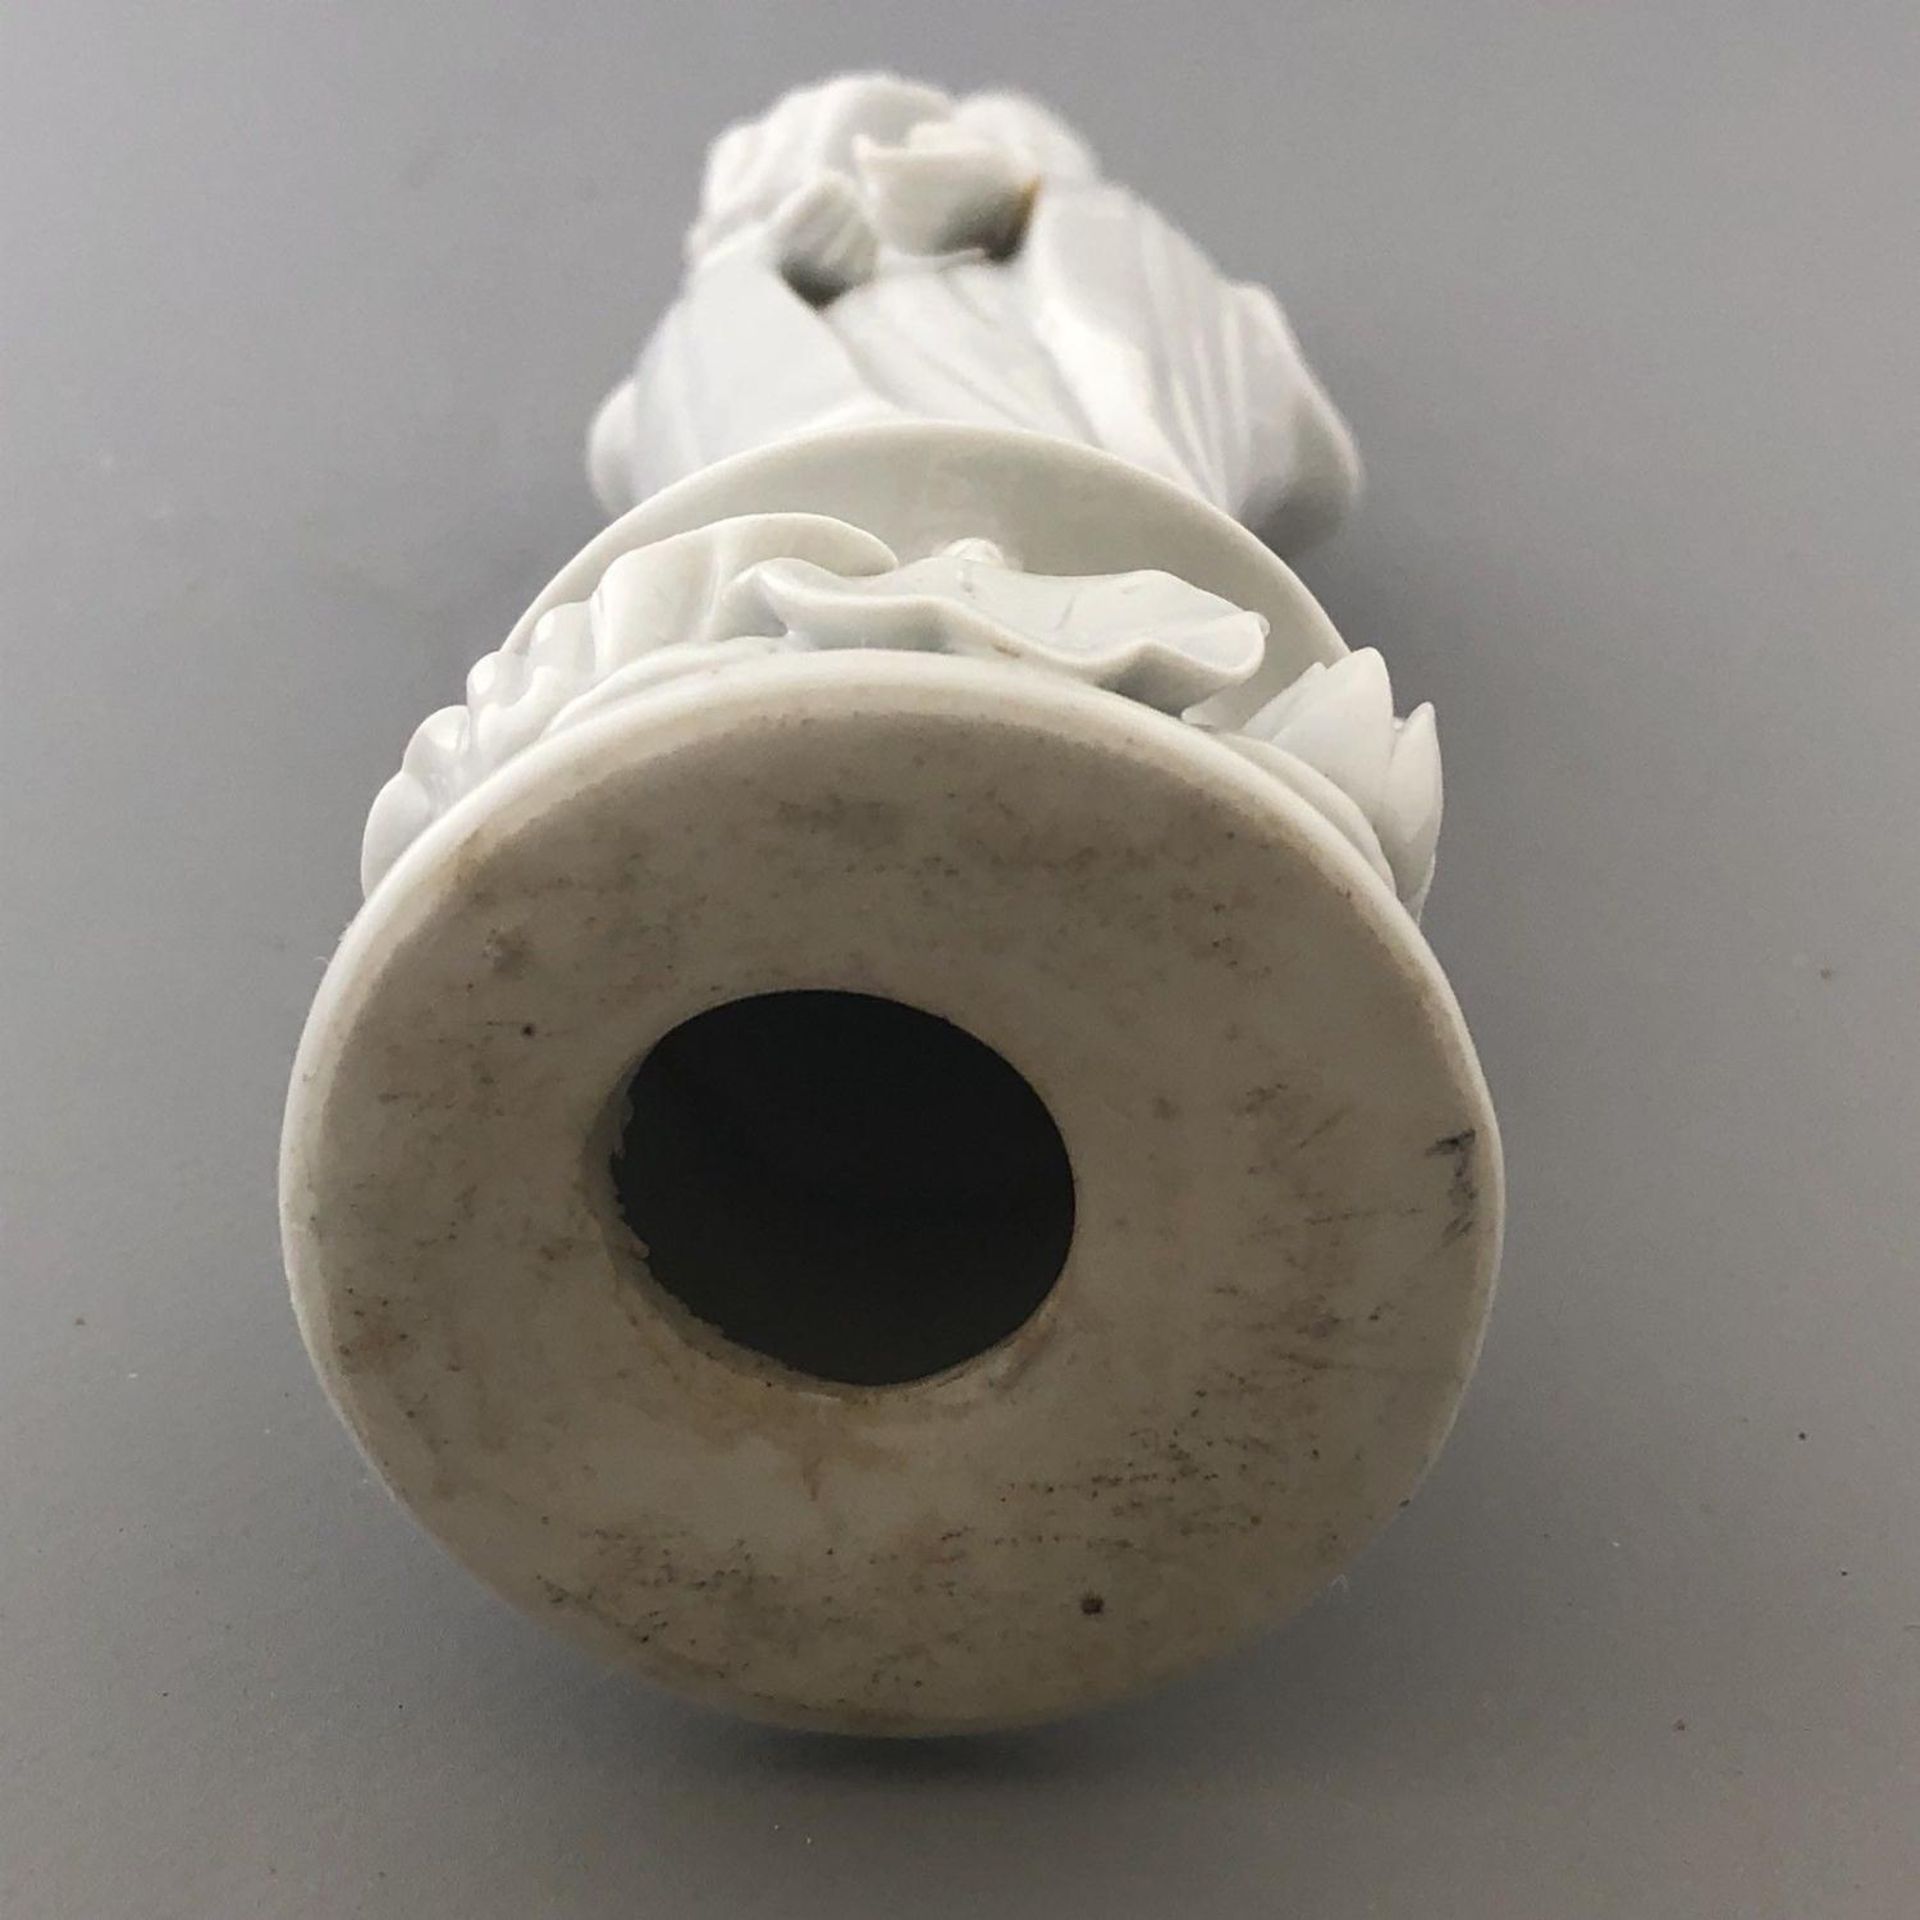 Old Antique Chinese Porcelain Figurine - Blanc de Chine - Guan Yin Lotus Flower - Image 7 of 9